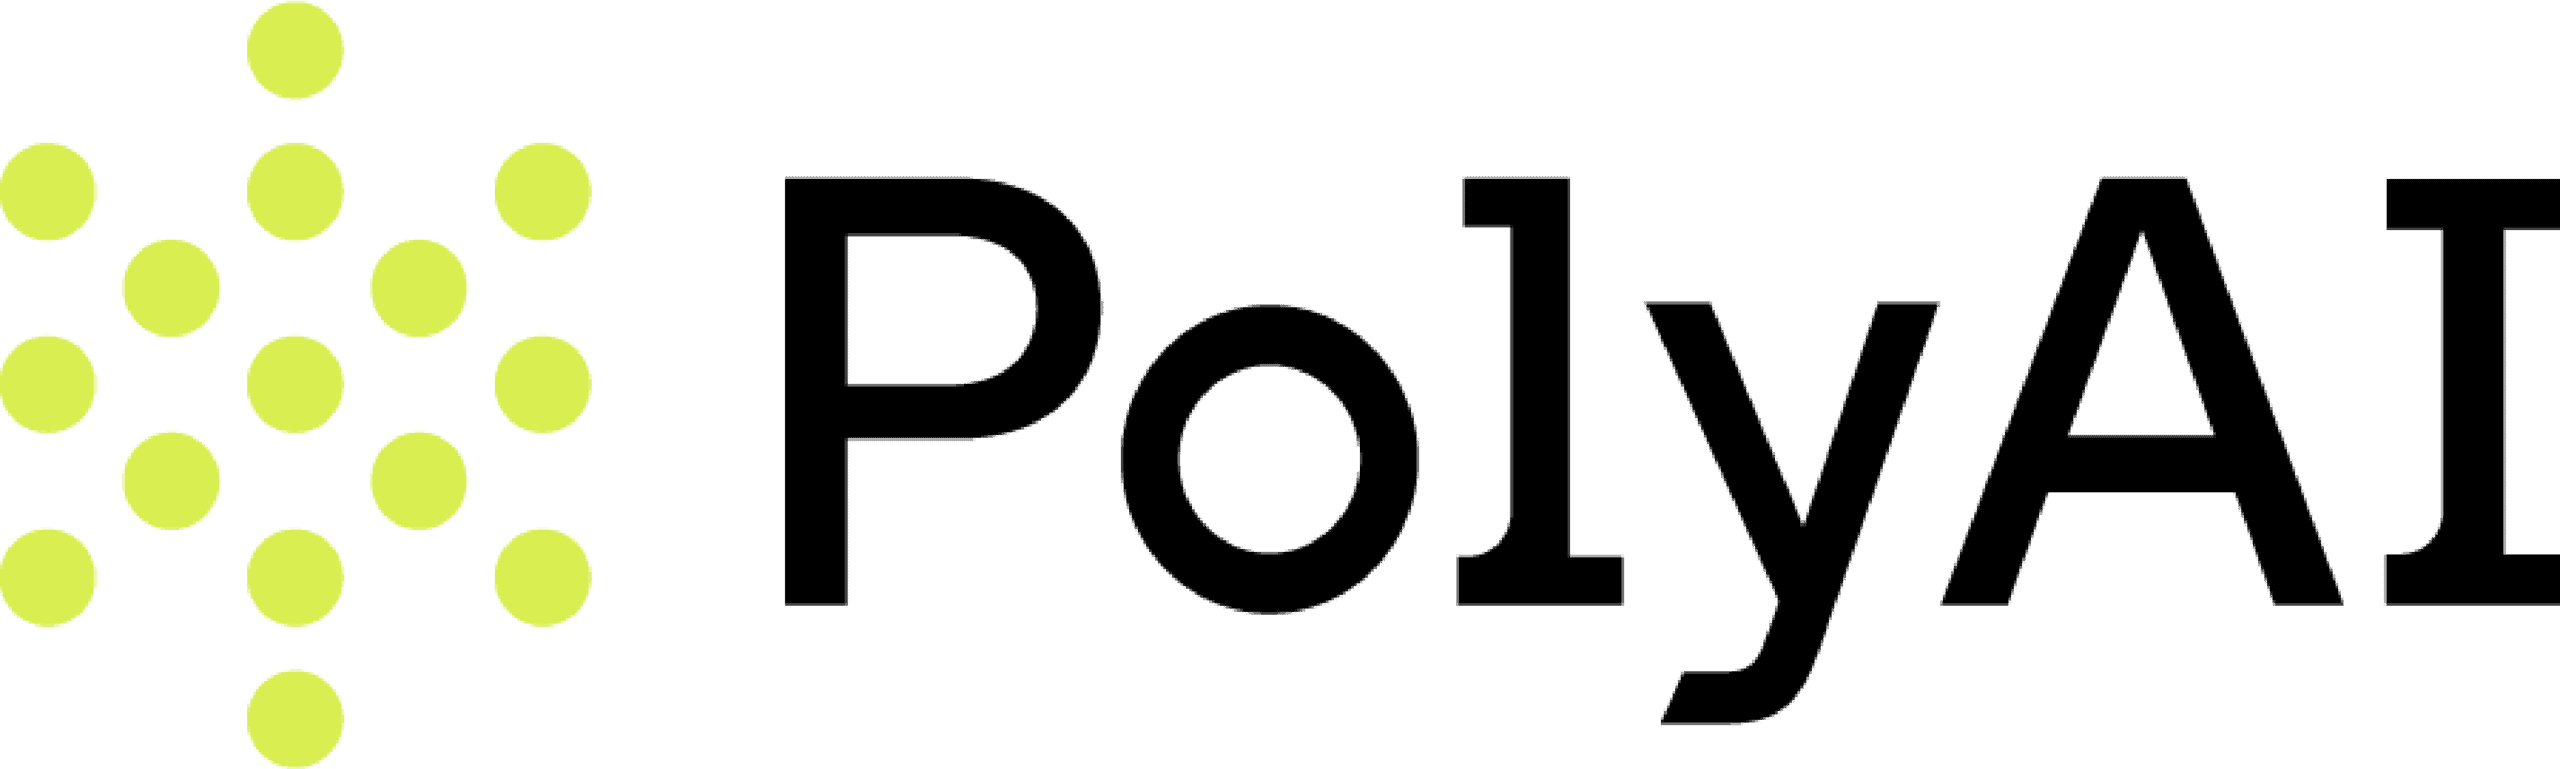 polyai logo